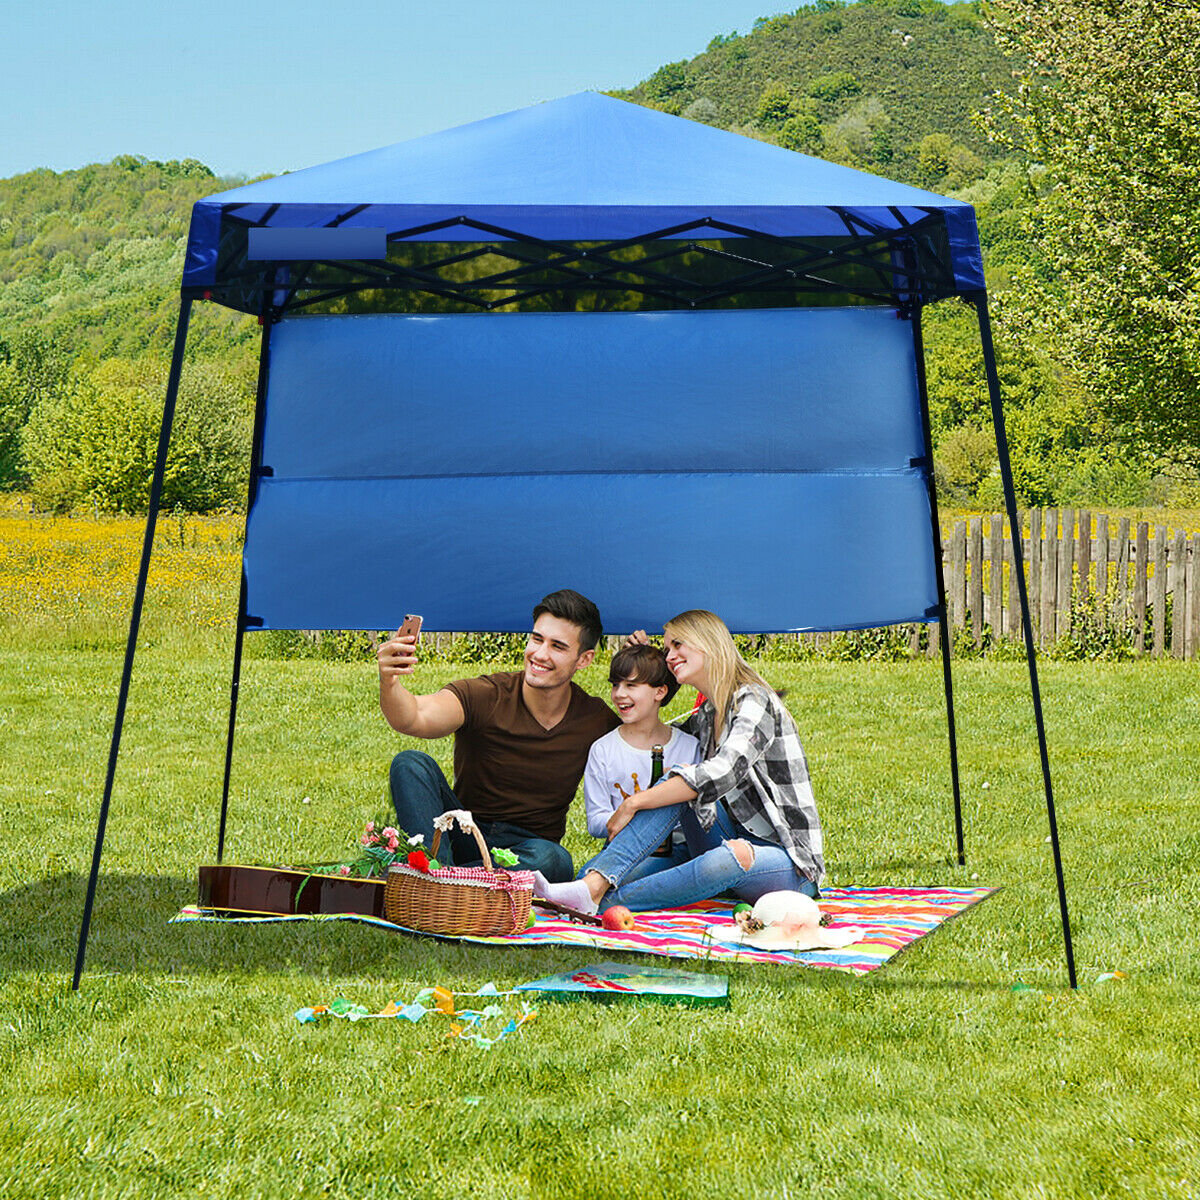 7x7 FT Slant Leg Pop-up Canopy Tent Shelter Adjustable Portable Carry Bag - Blue